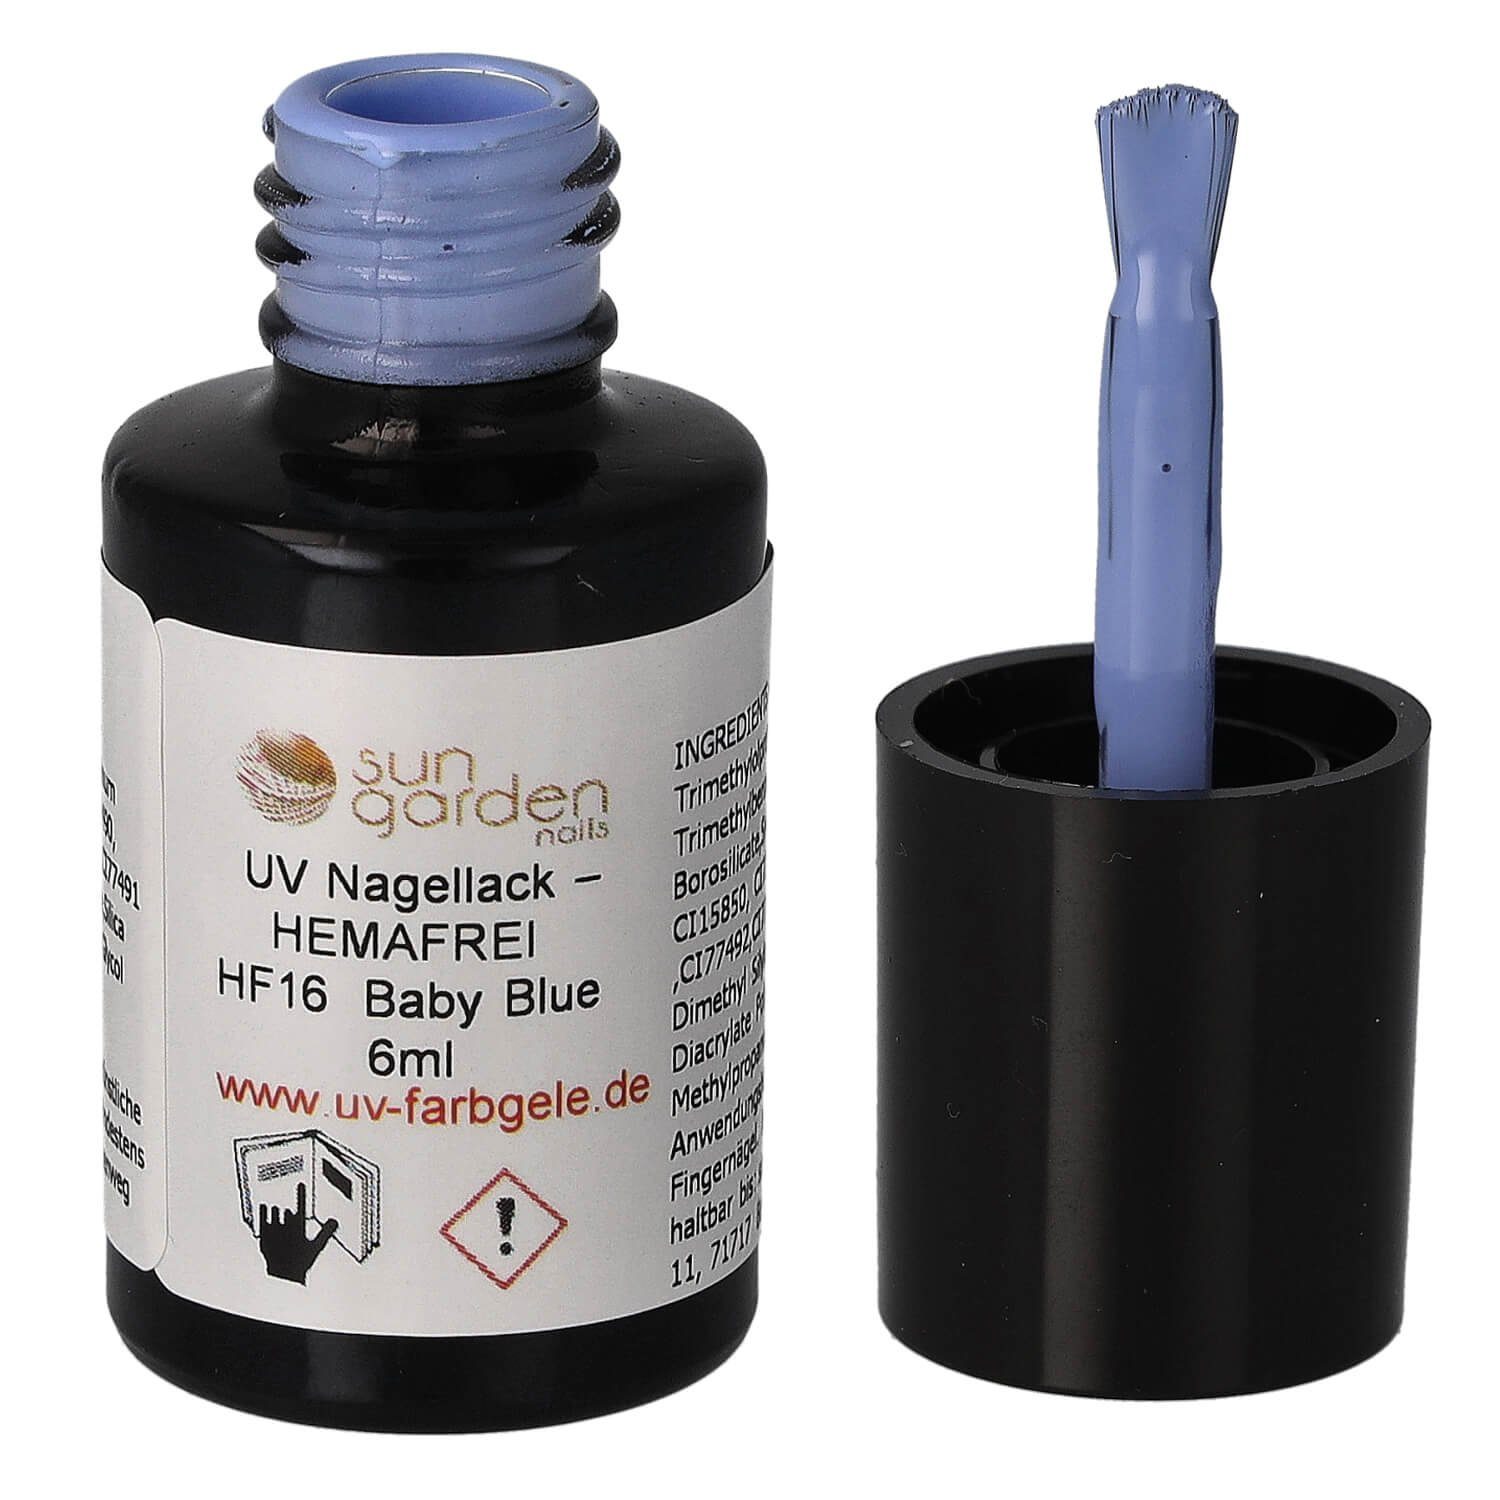 UV Garden Blue Nails - 6ml Nagellack – Baby Sun HF16 HEMAFREI Nagellack